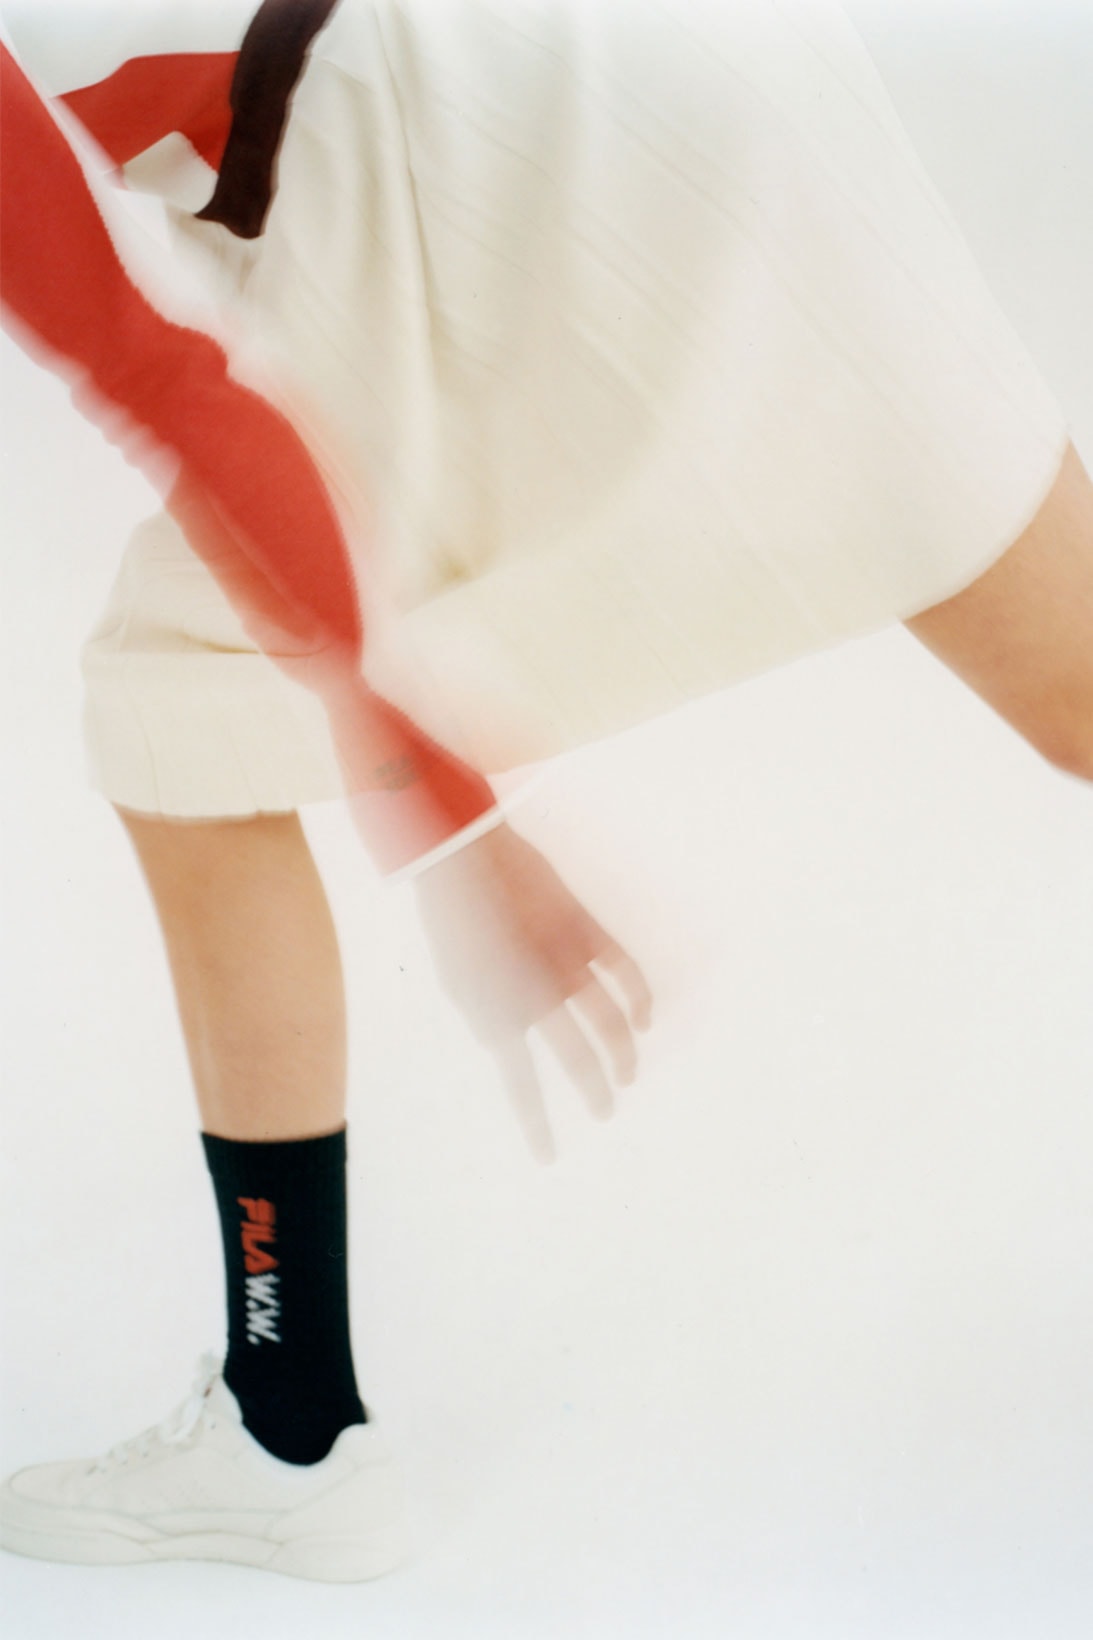 fila wood wood collaboration 70s tennis collection white orange dress socks